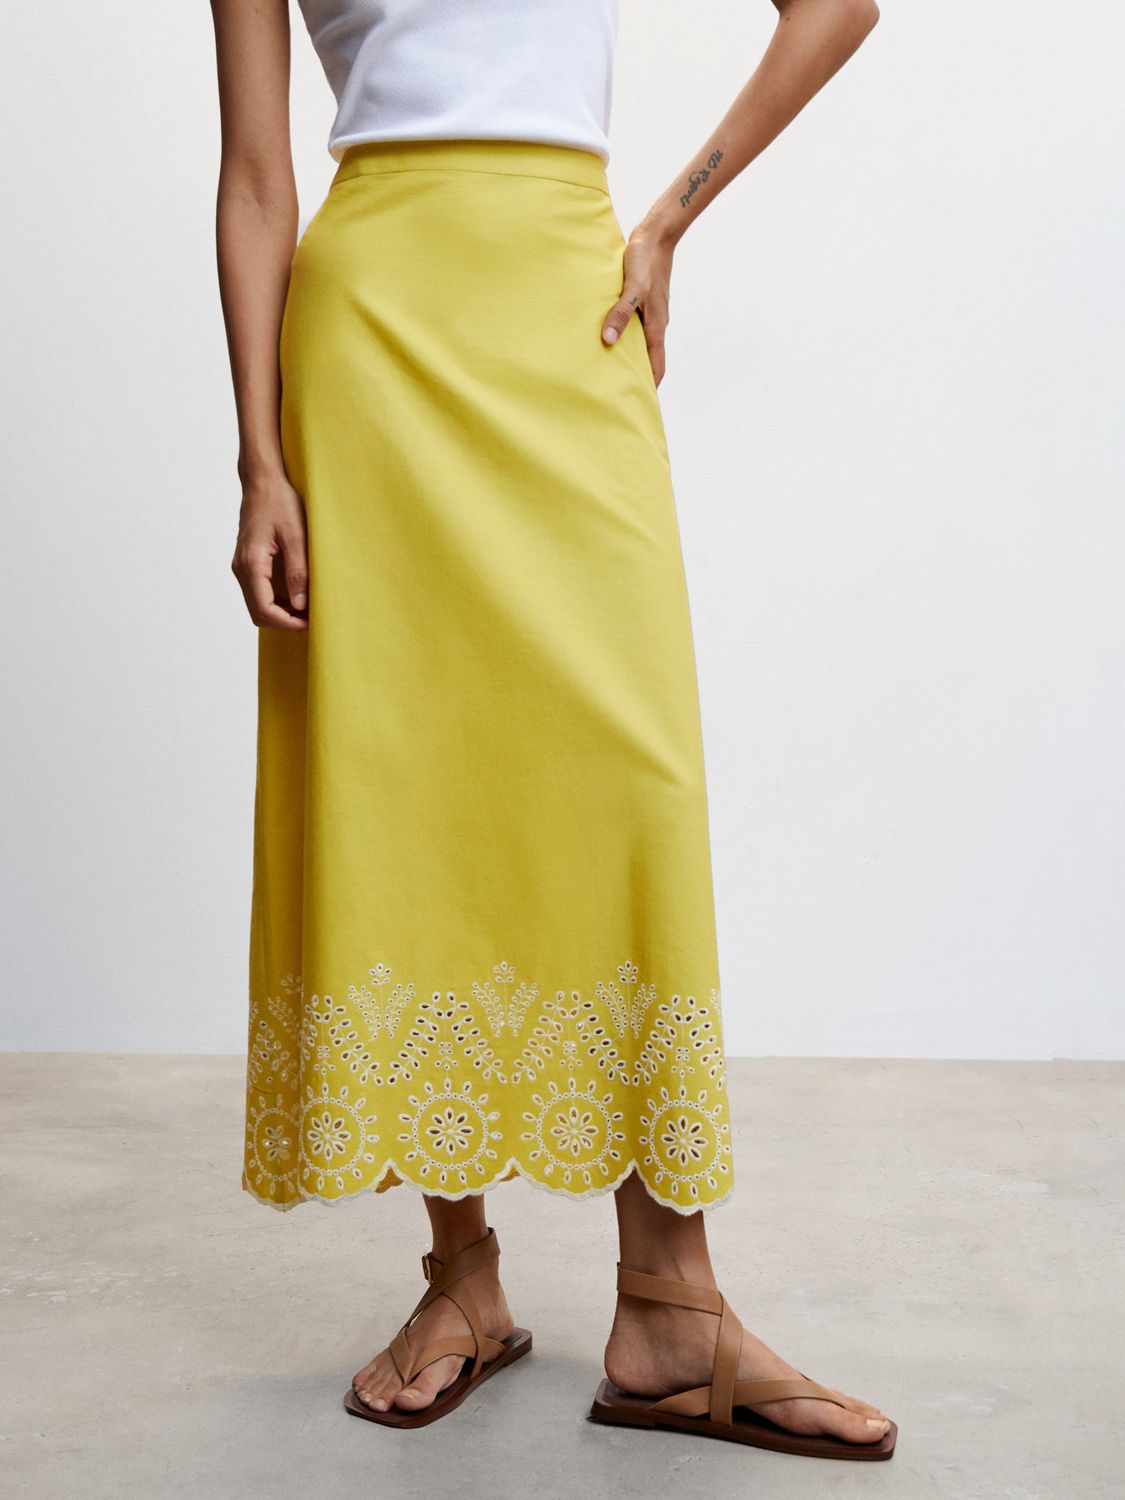 Mango Shana Broderie Anglaise Cotton Midi Skirt, Mustard, M